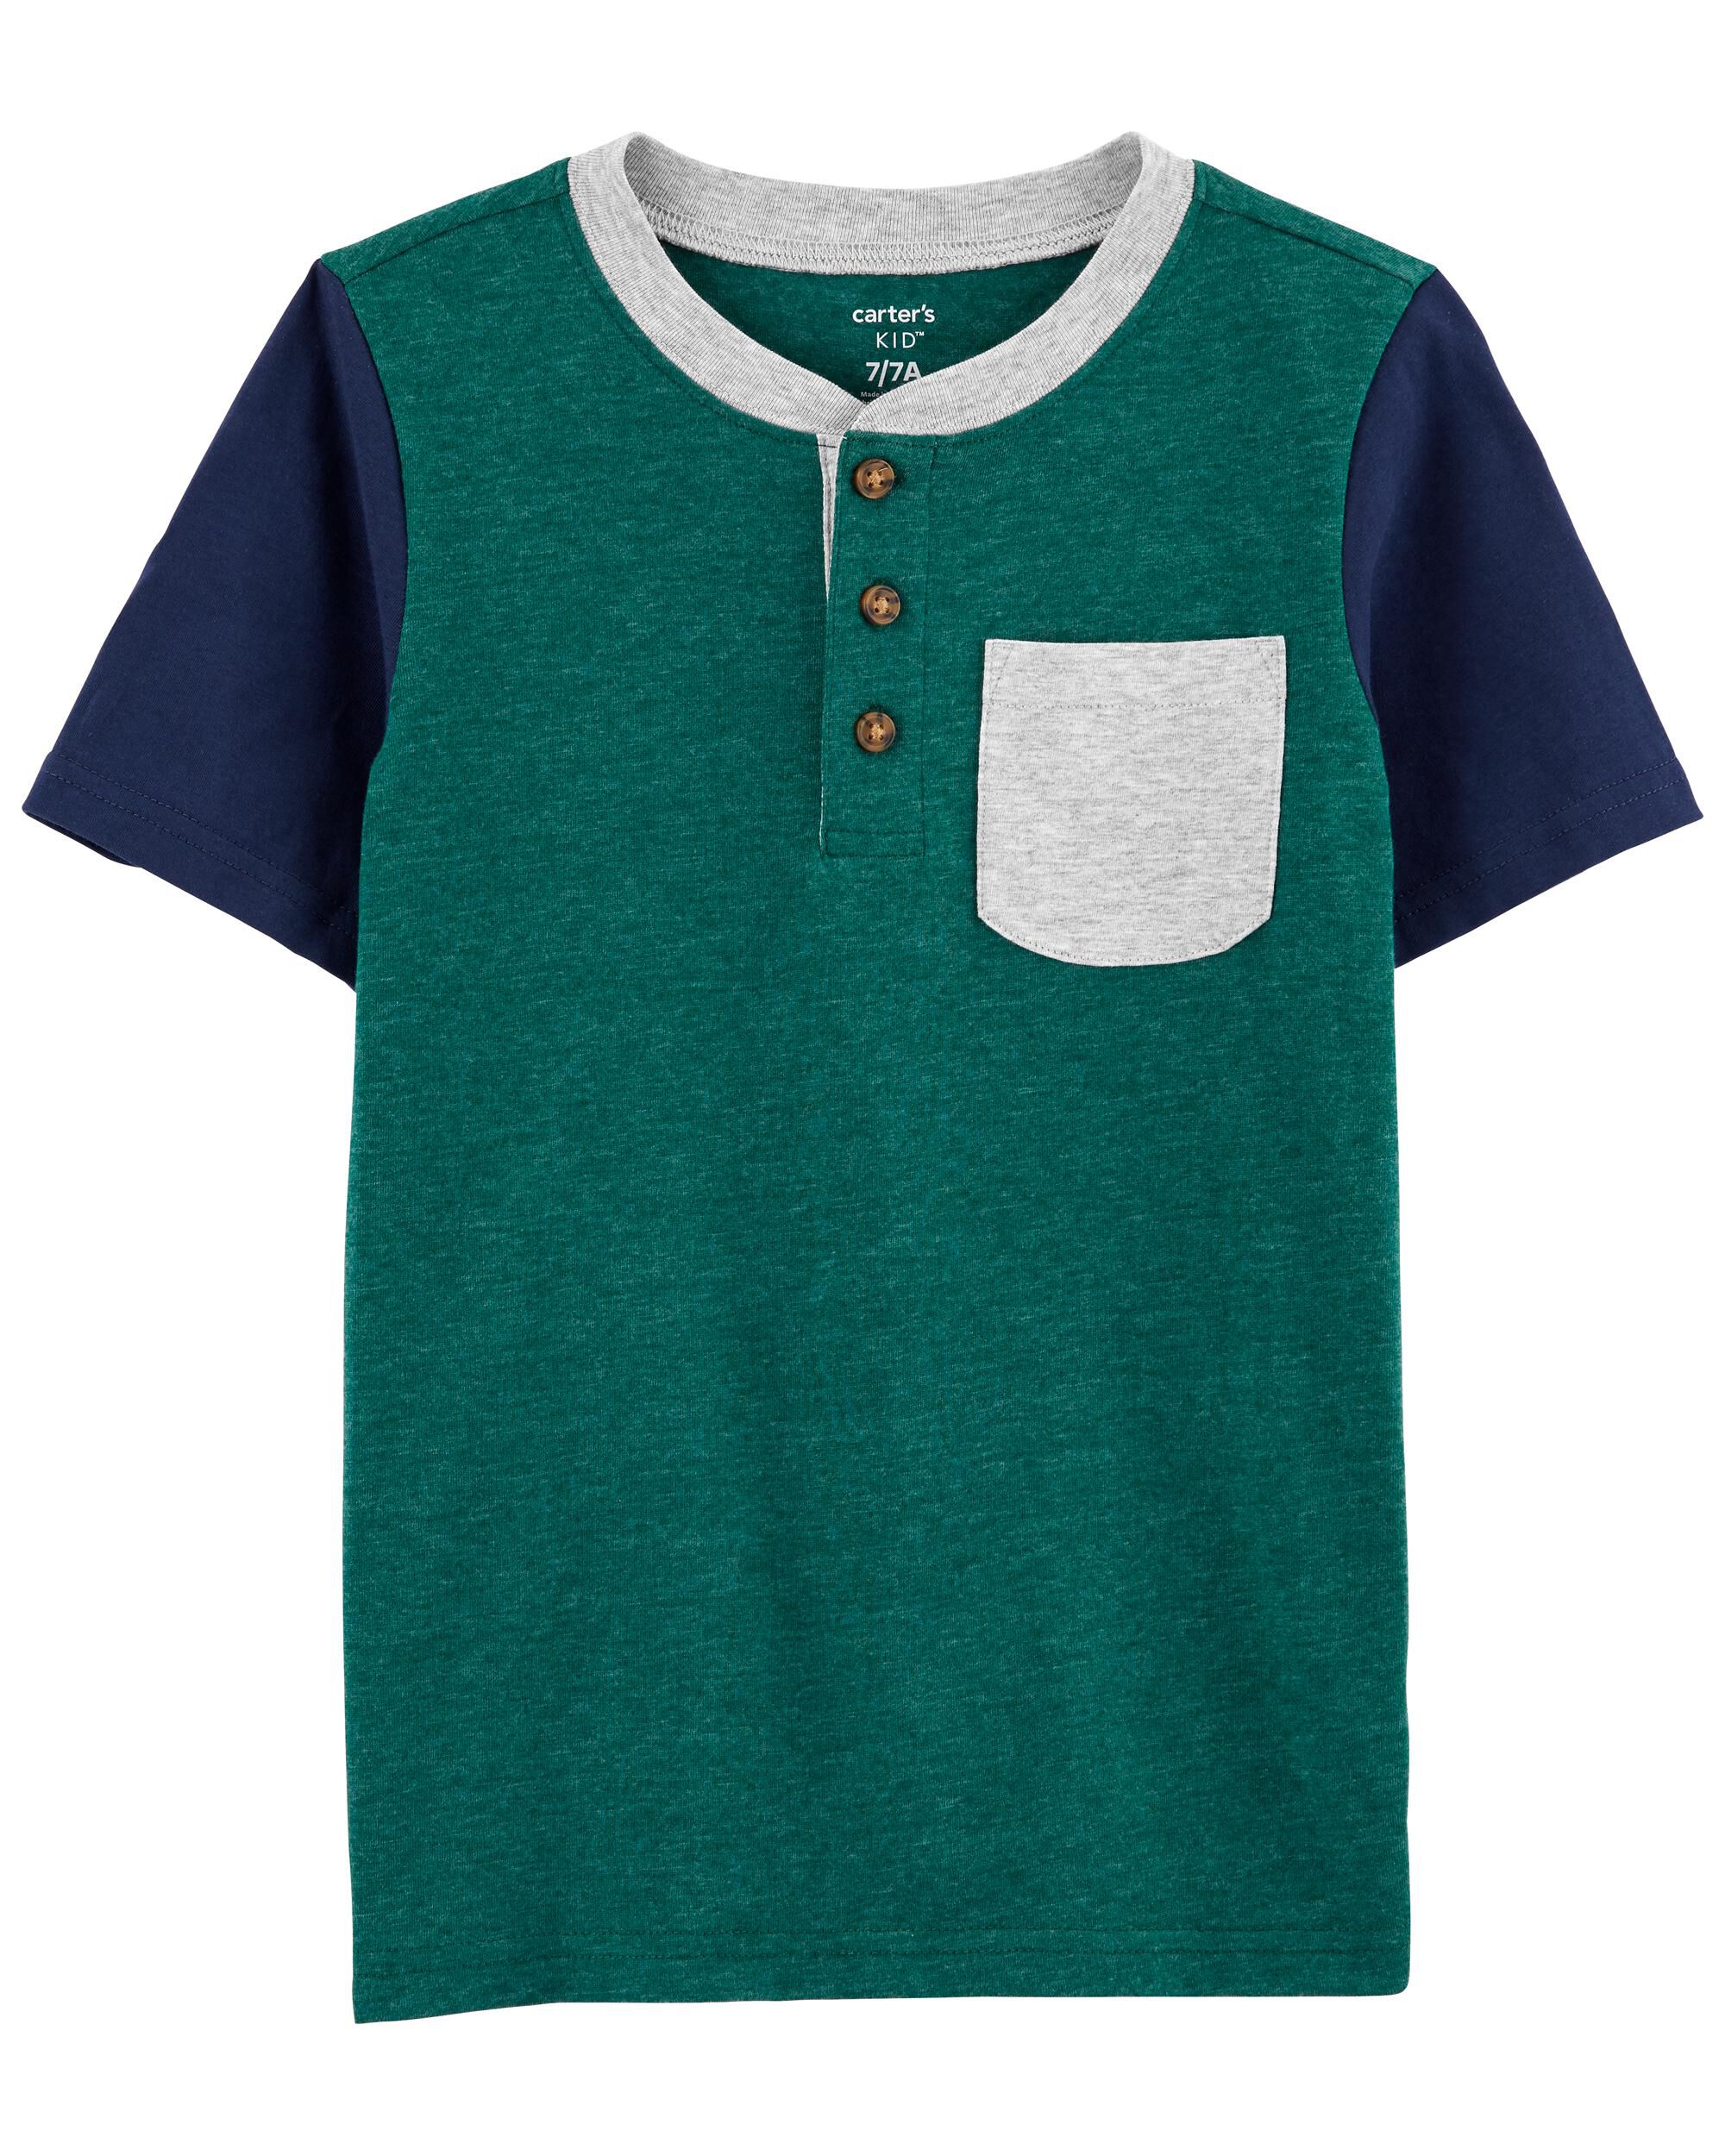 New Carter's Dinosaur Boys Shirt Top Toddler Gray Many size 